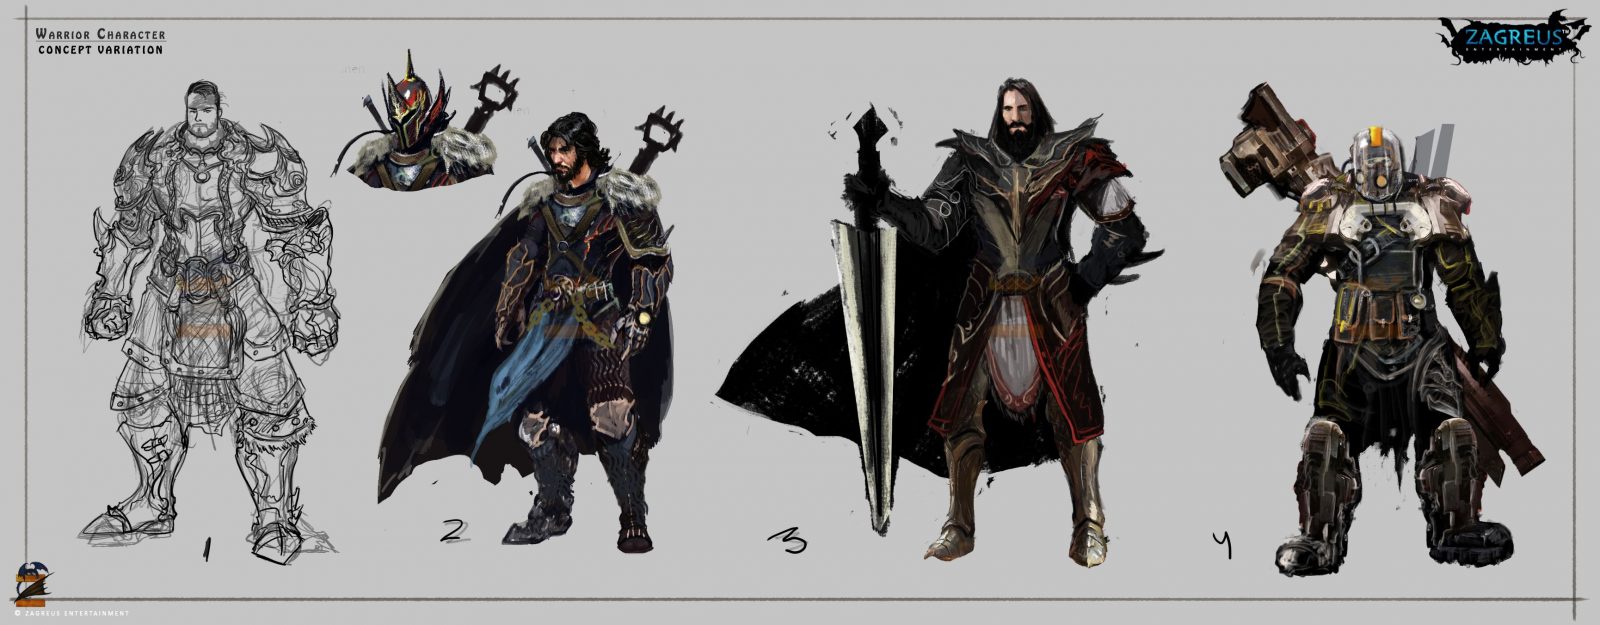 Warrior-Character-Concept-Variation_ZE.j